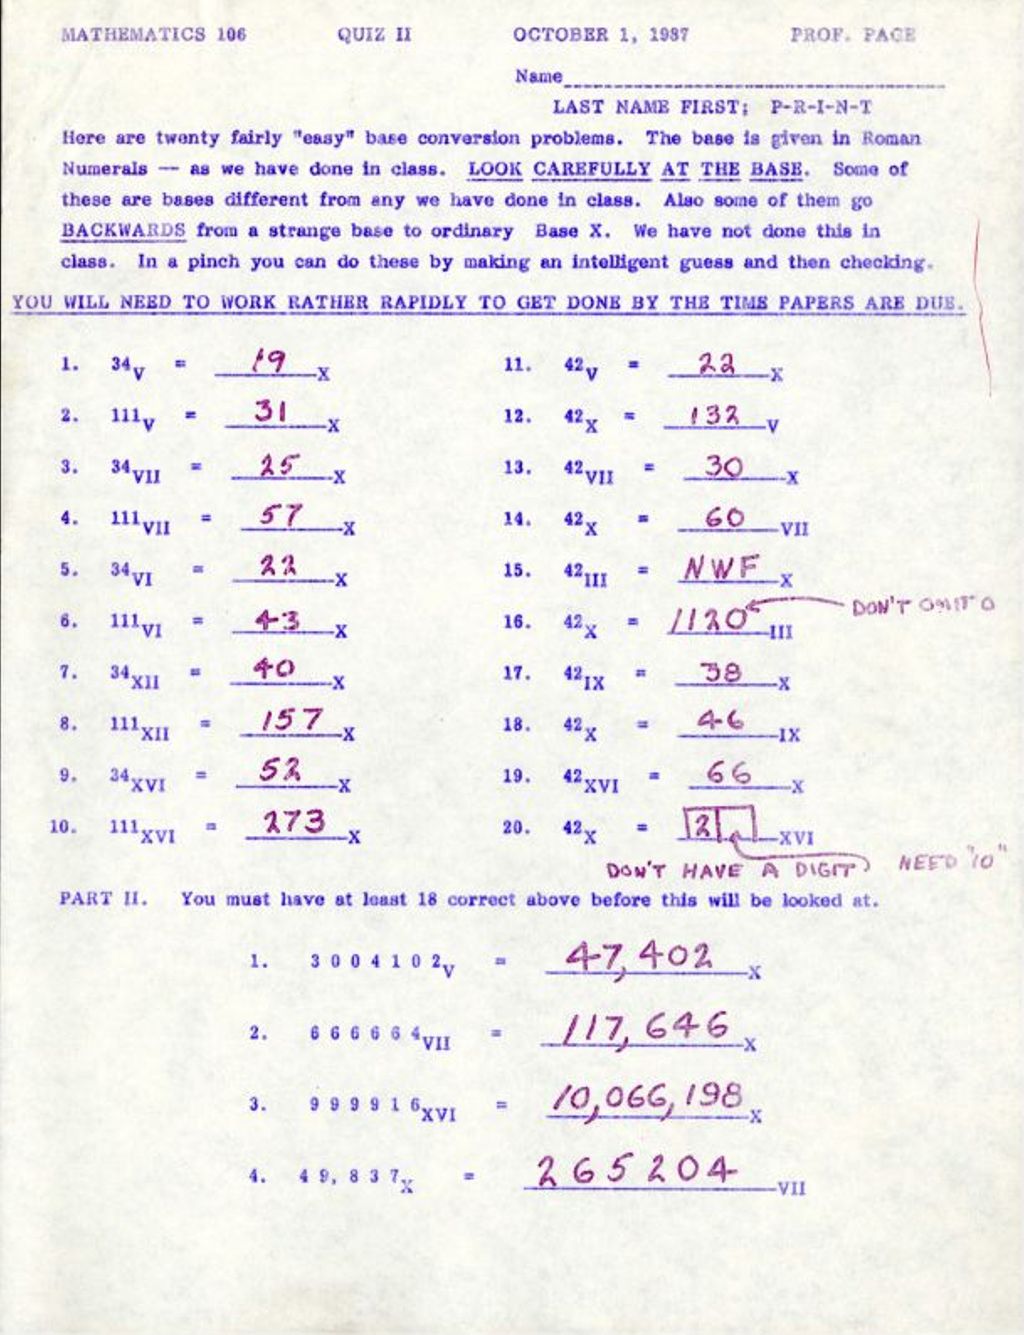 Miniature of Math 106 Quiz II (1987) Twenty fairly "easy” base conversions AK